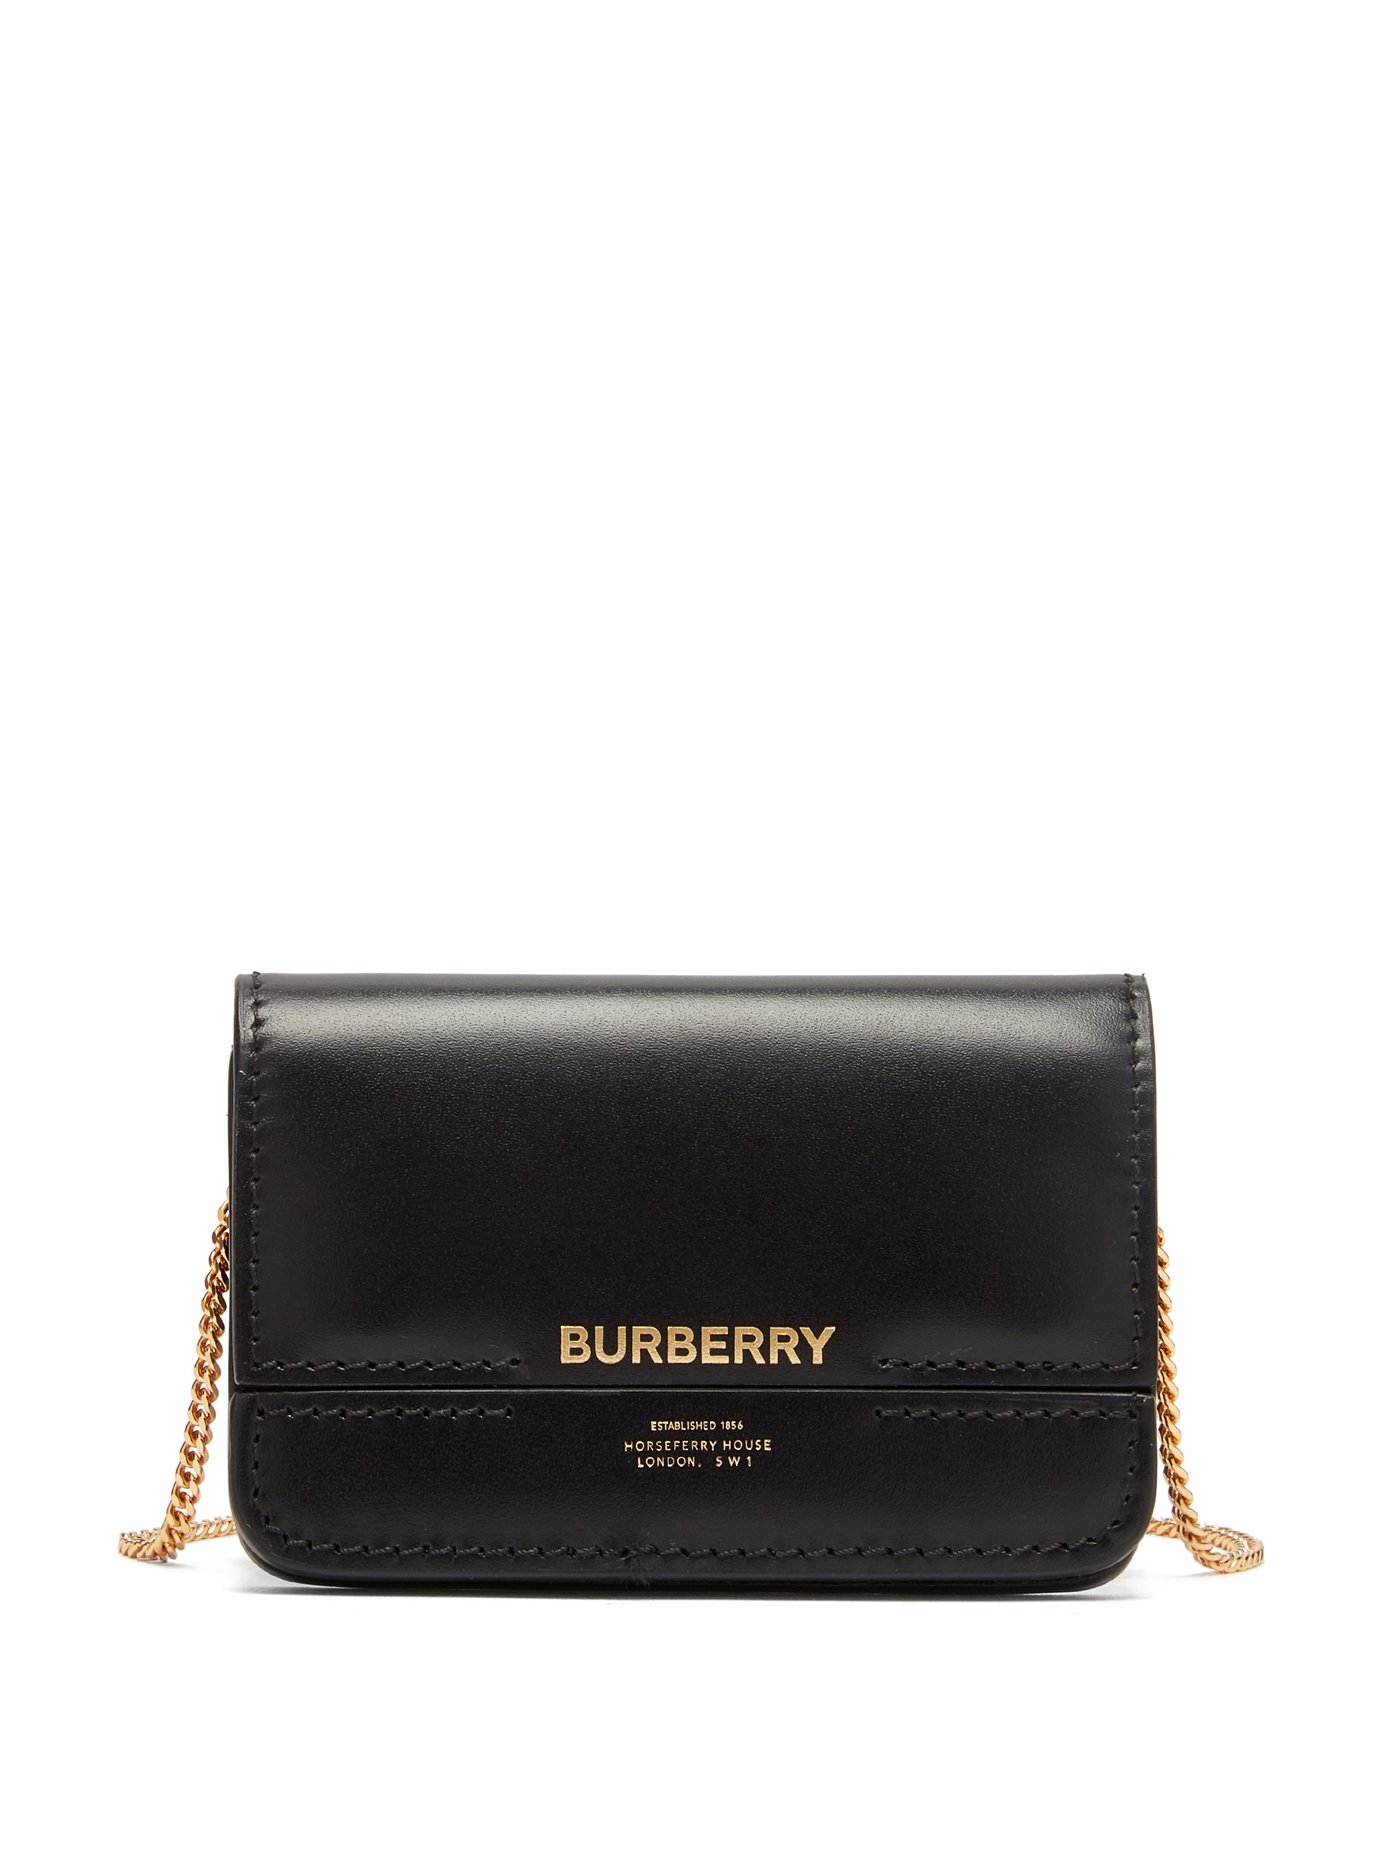 burberry chain purse